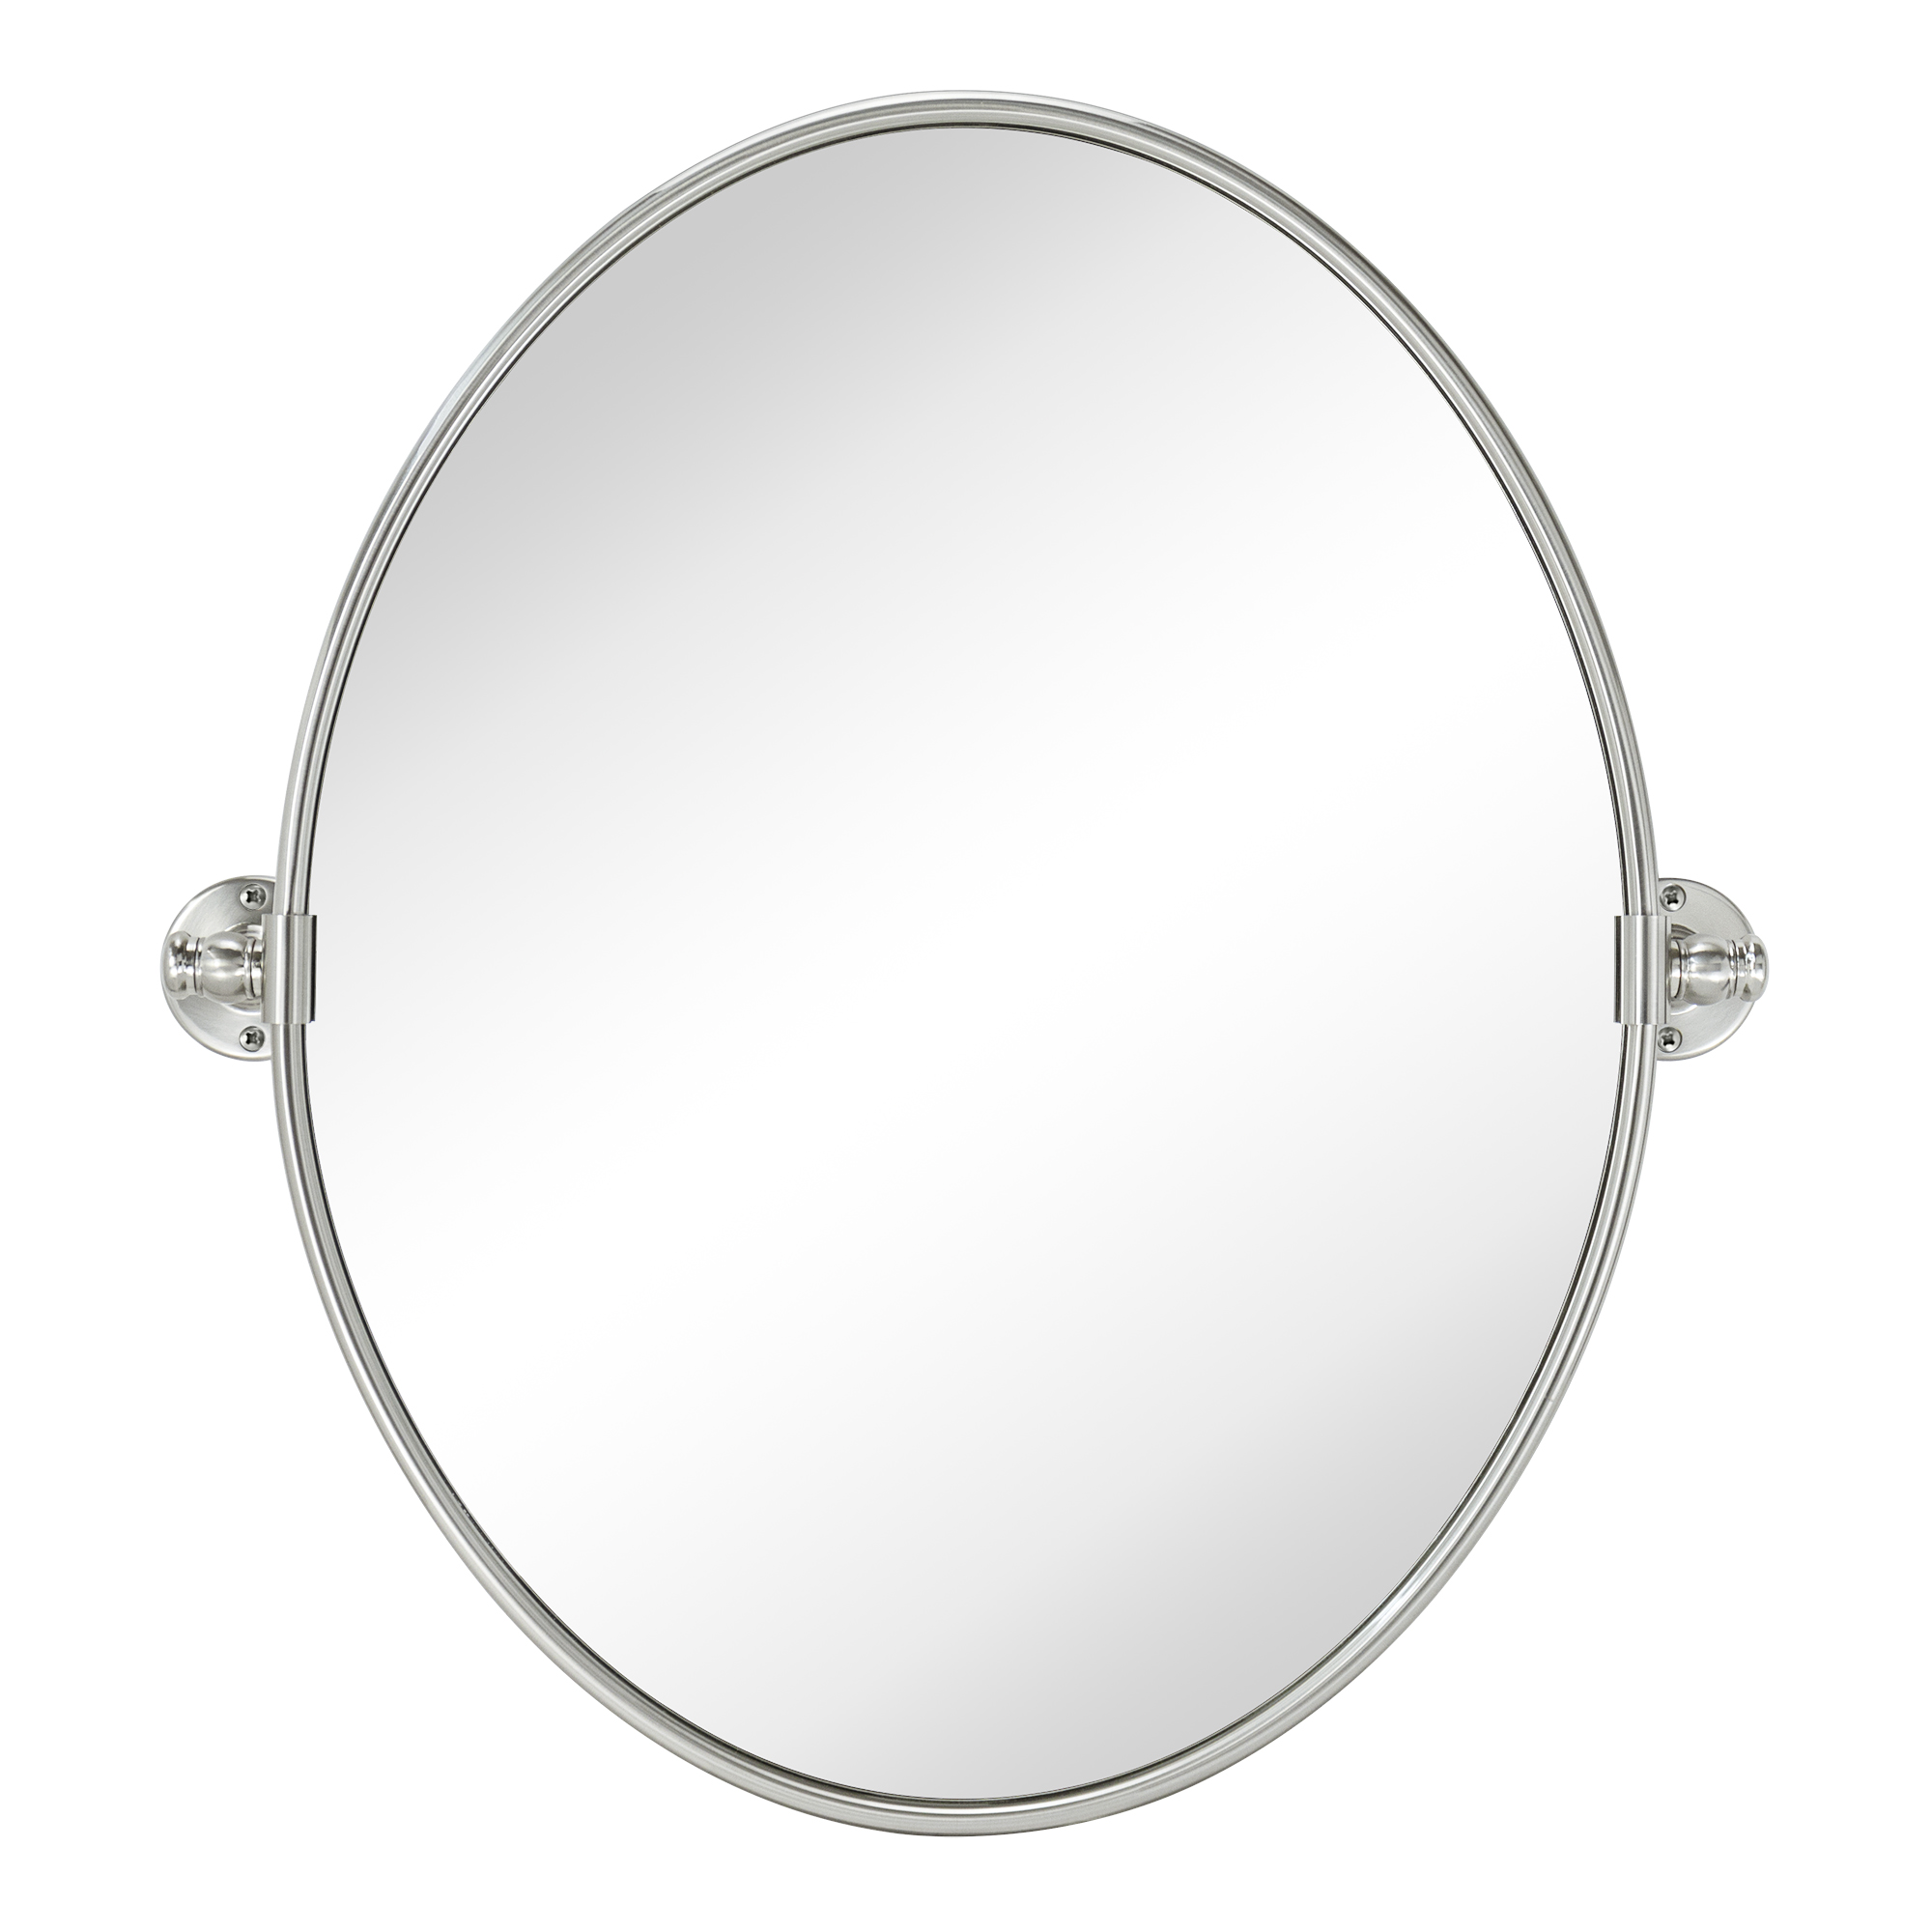 Luecinda Oval Metal Wall Mirror-19x24-Brushed Nickel